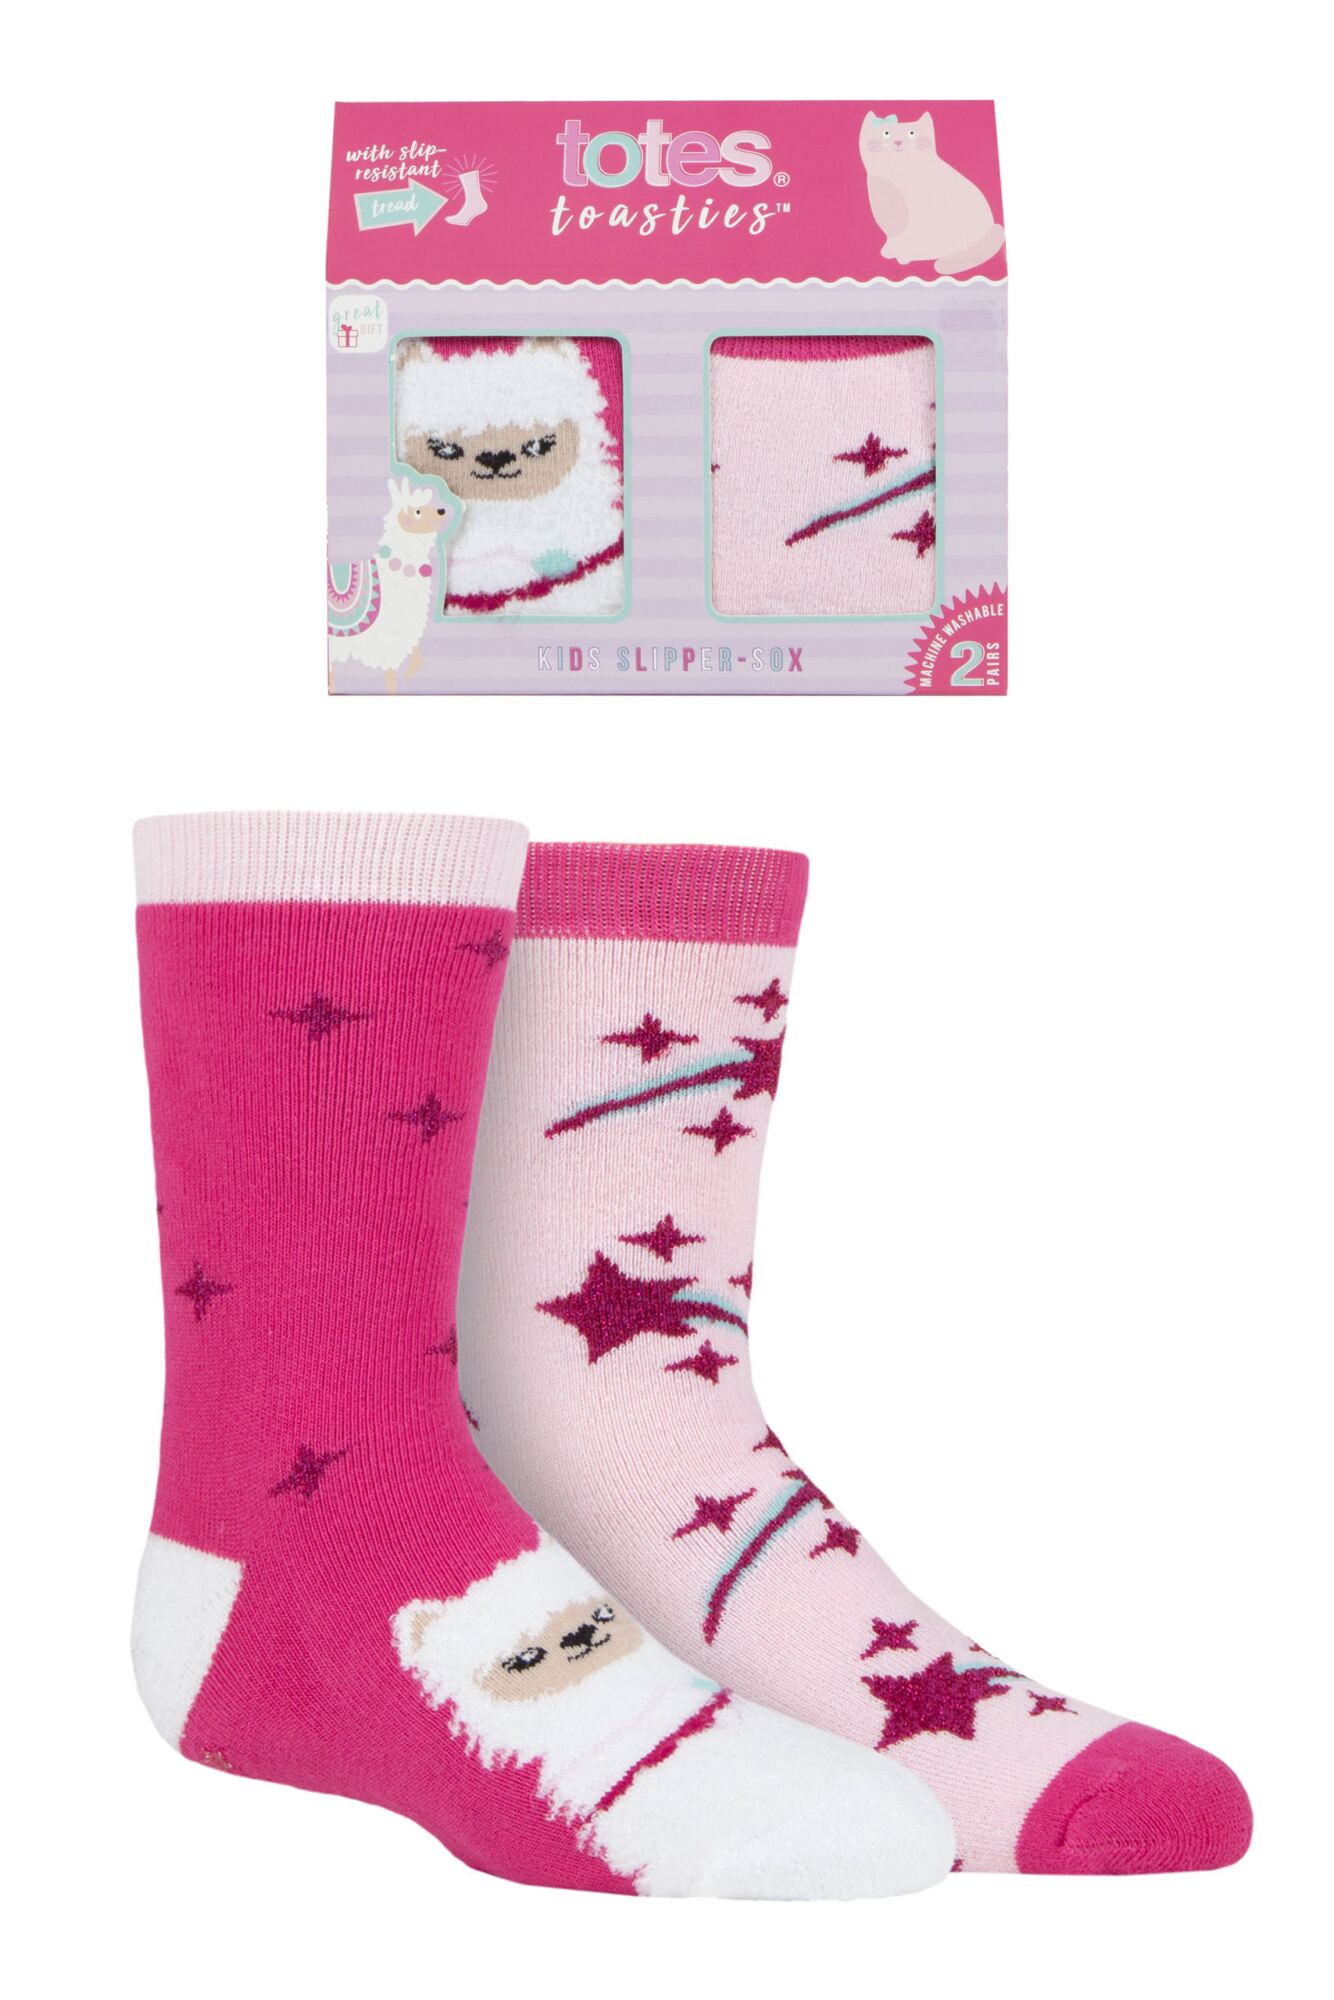 2 Pair Originals Novelty Slipper Socks Girls - Totes